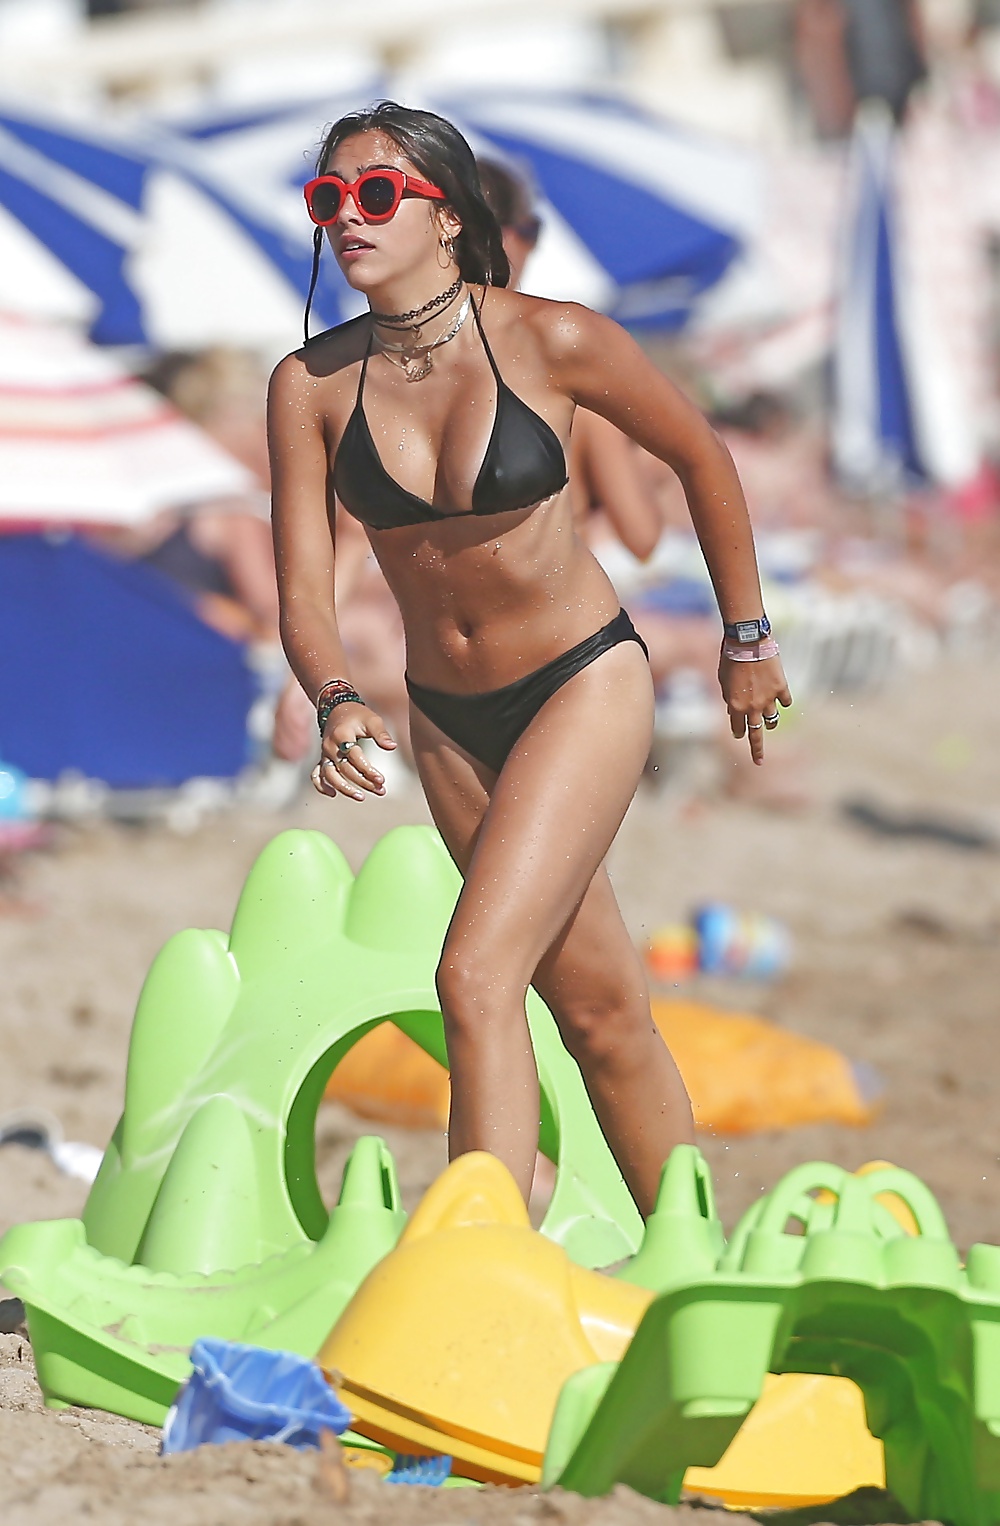 Lourdes leon - bikini a cannes, parte 4, agosto 2014
 #32989601